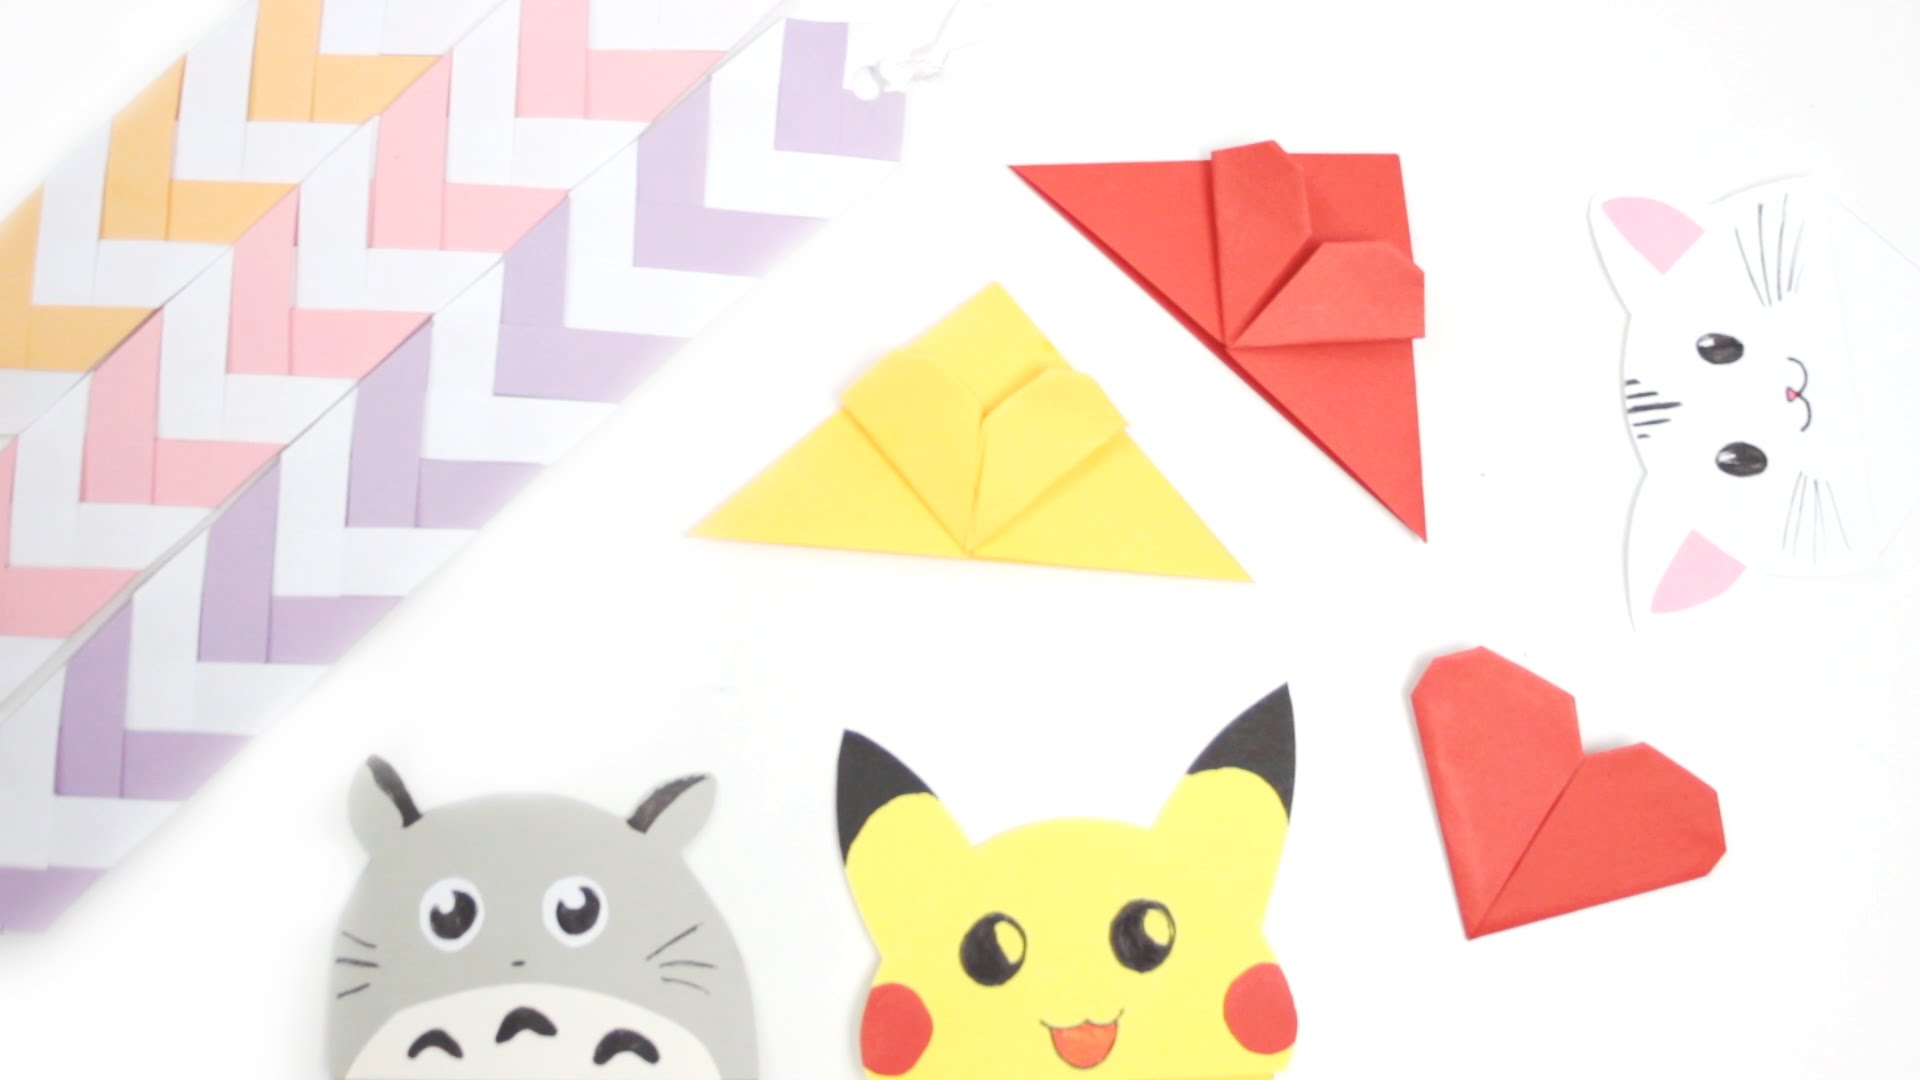 “How to make Origami” แอปที่คนชอบ ‘พับกระดาษ’  พลาดไม่ได้